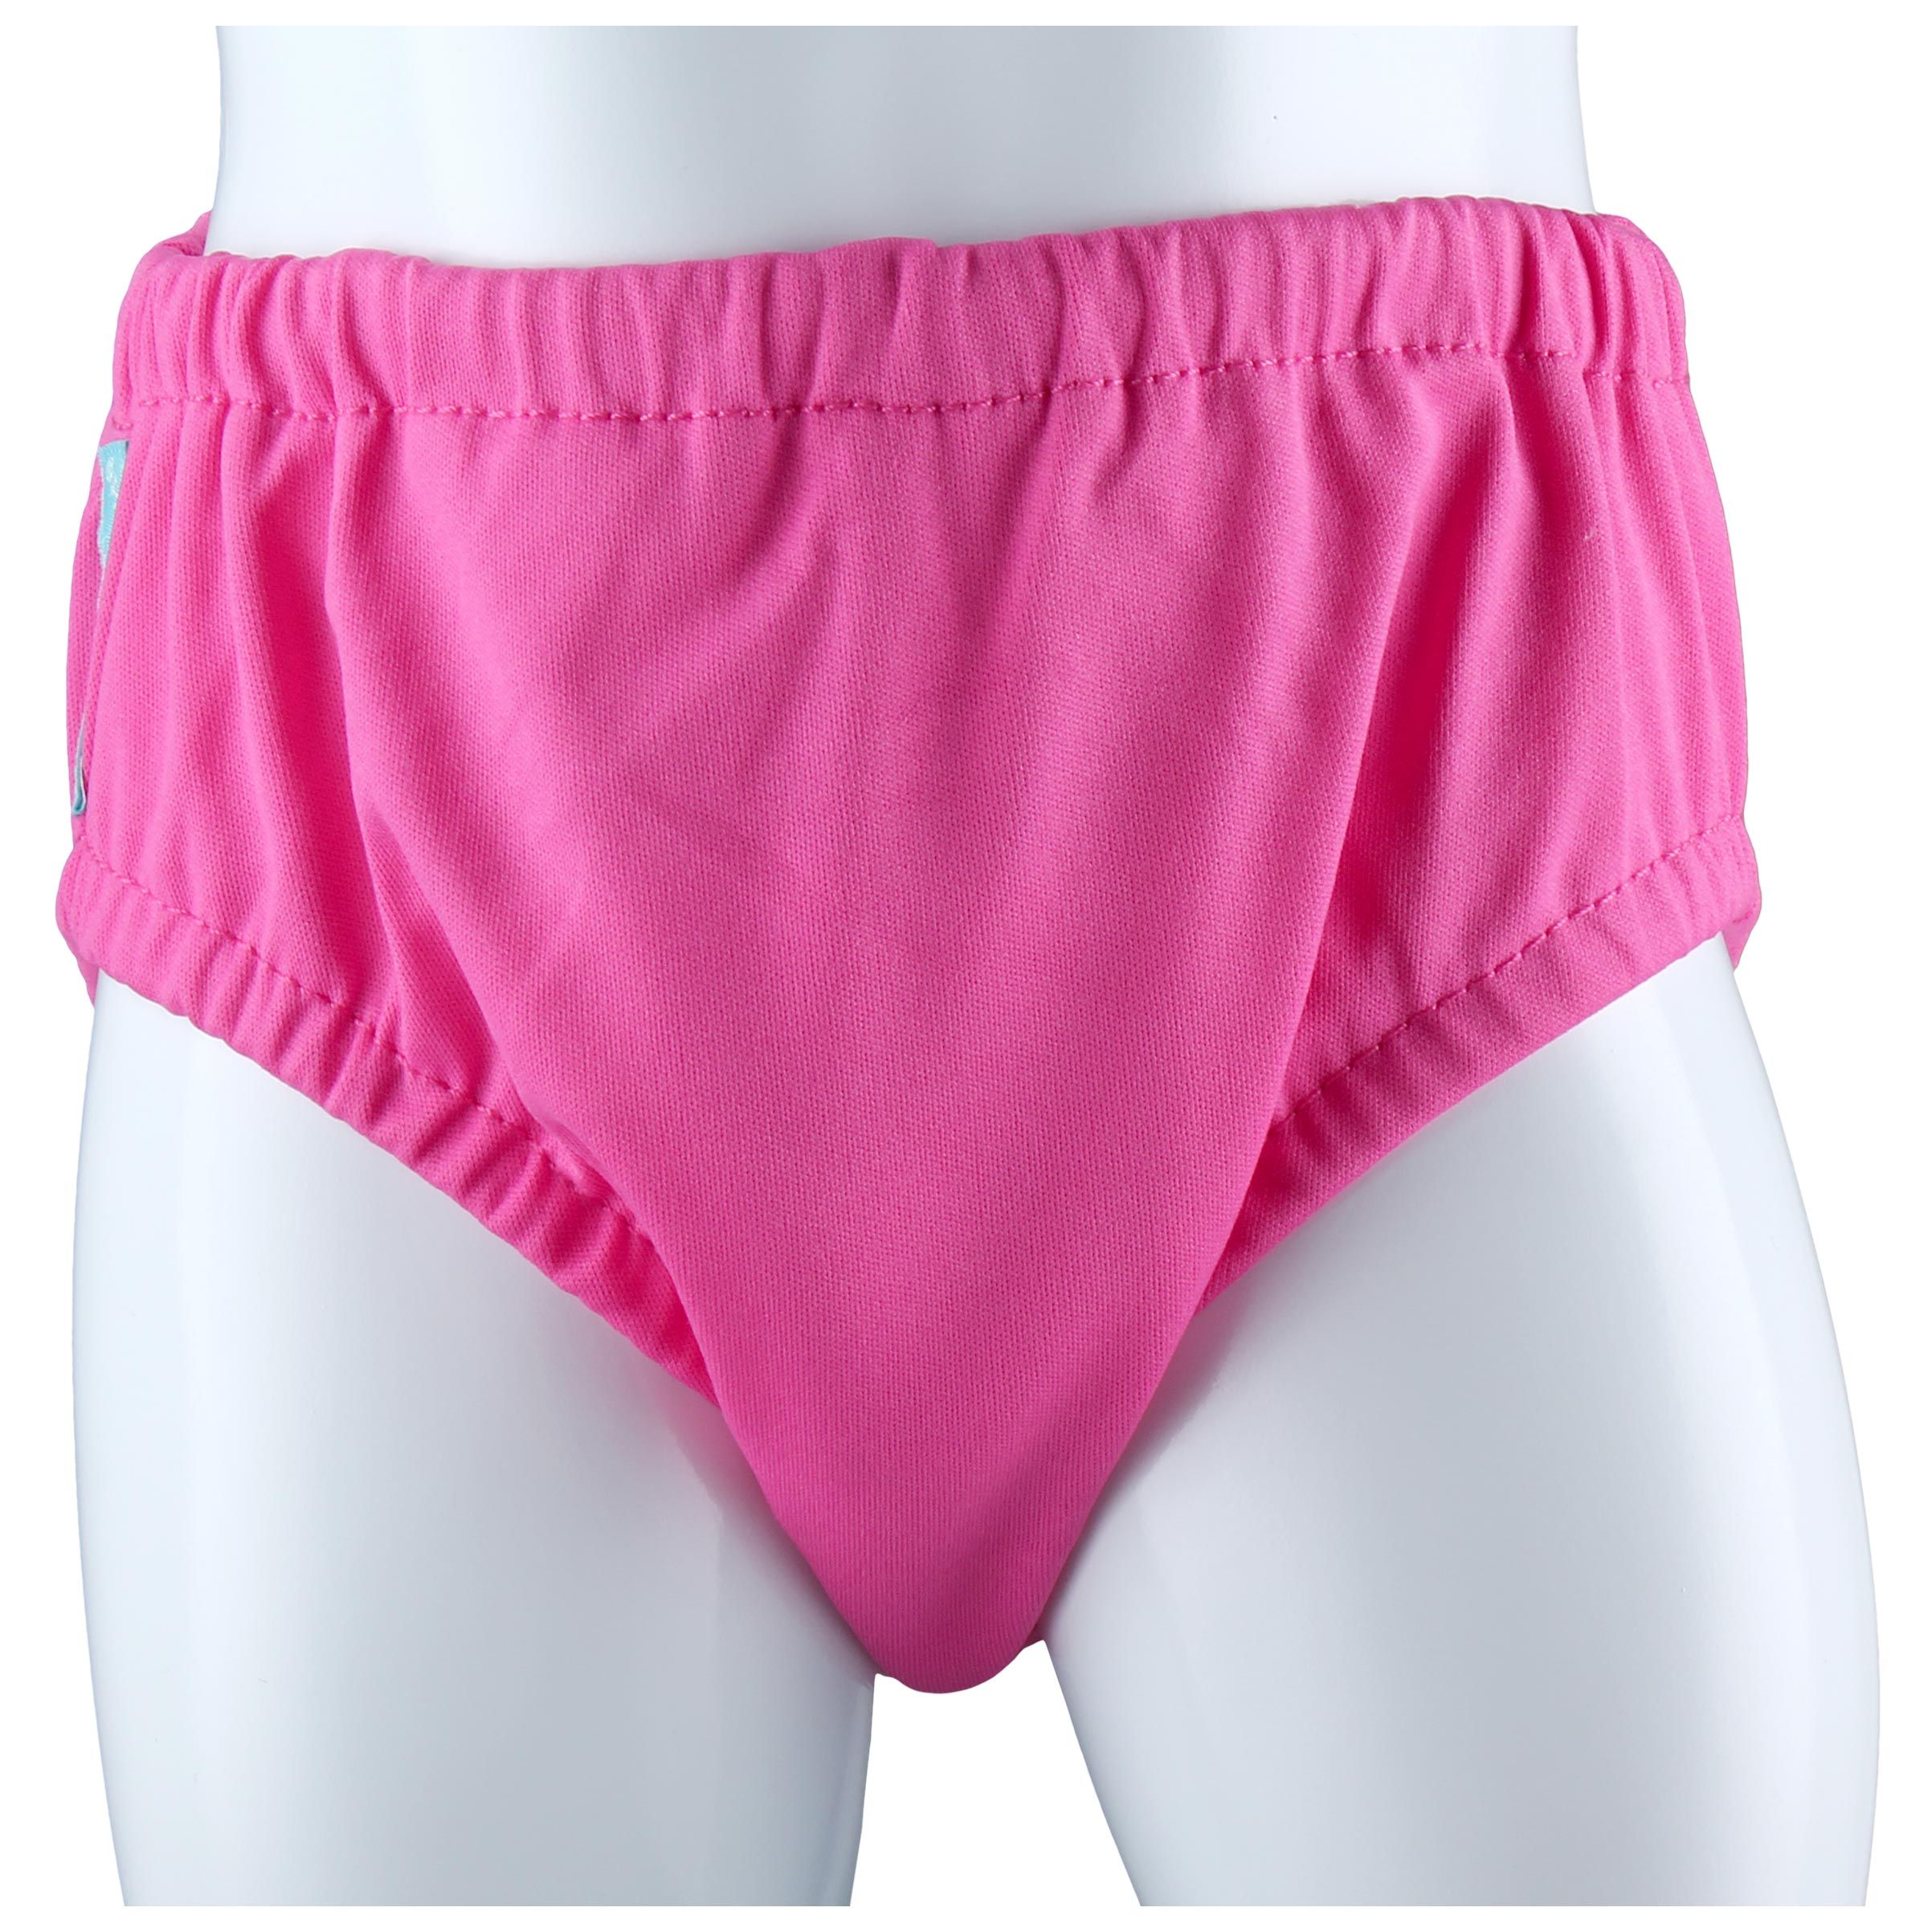 Charlie Banana Swim Diaper+Training Pant Hot Pink S - 2